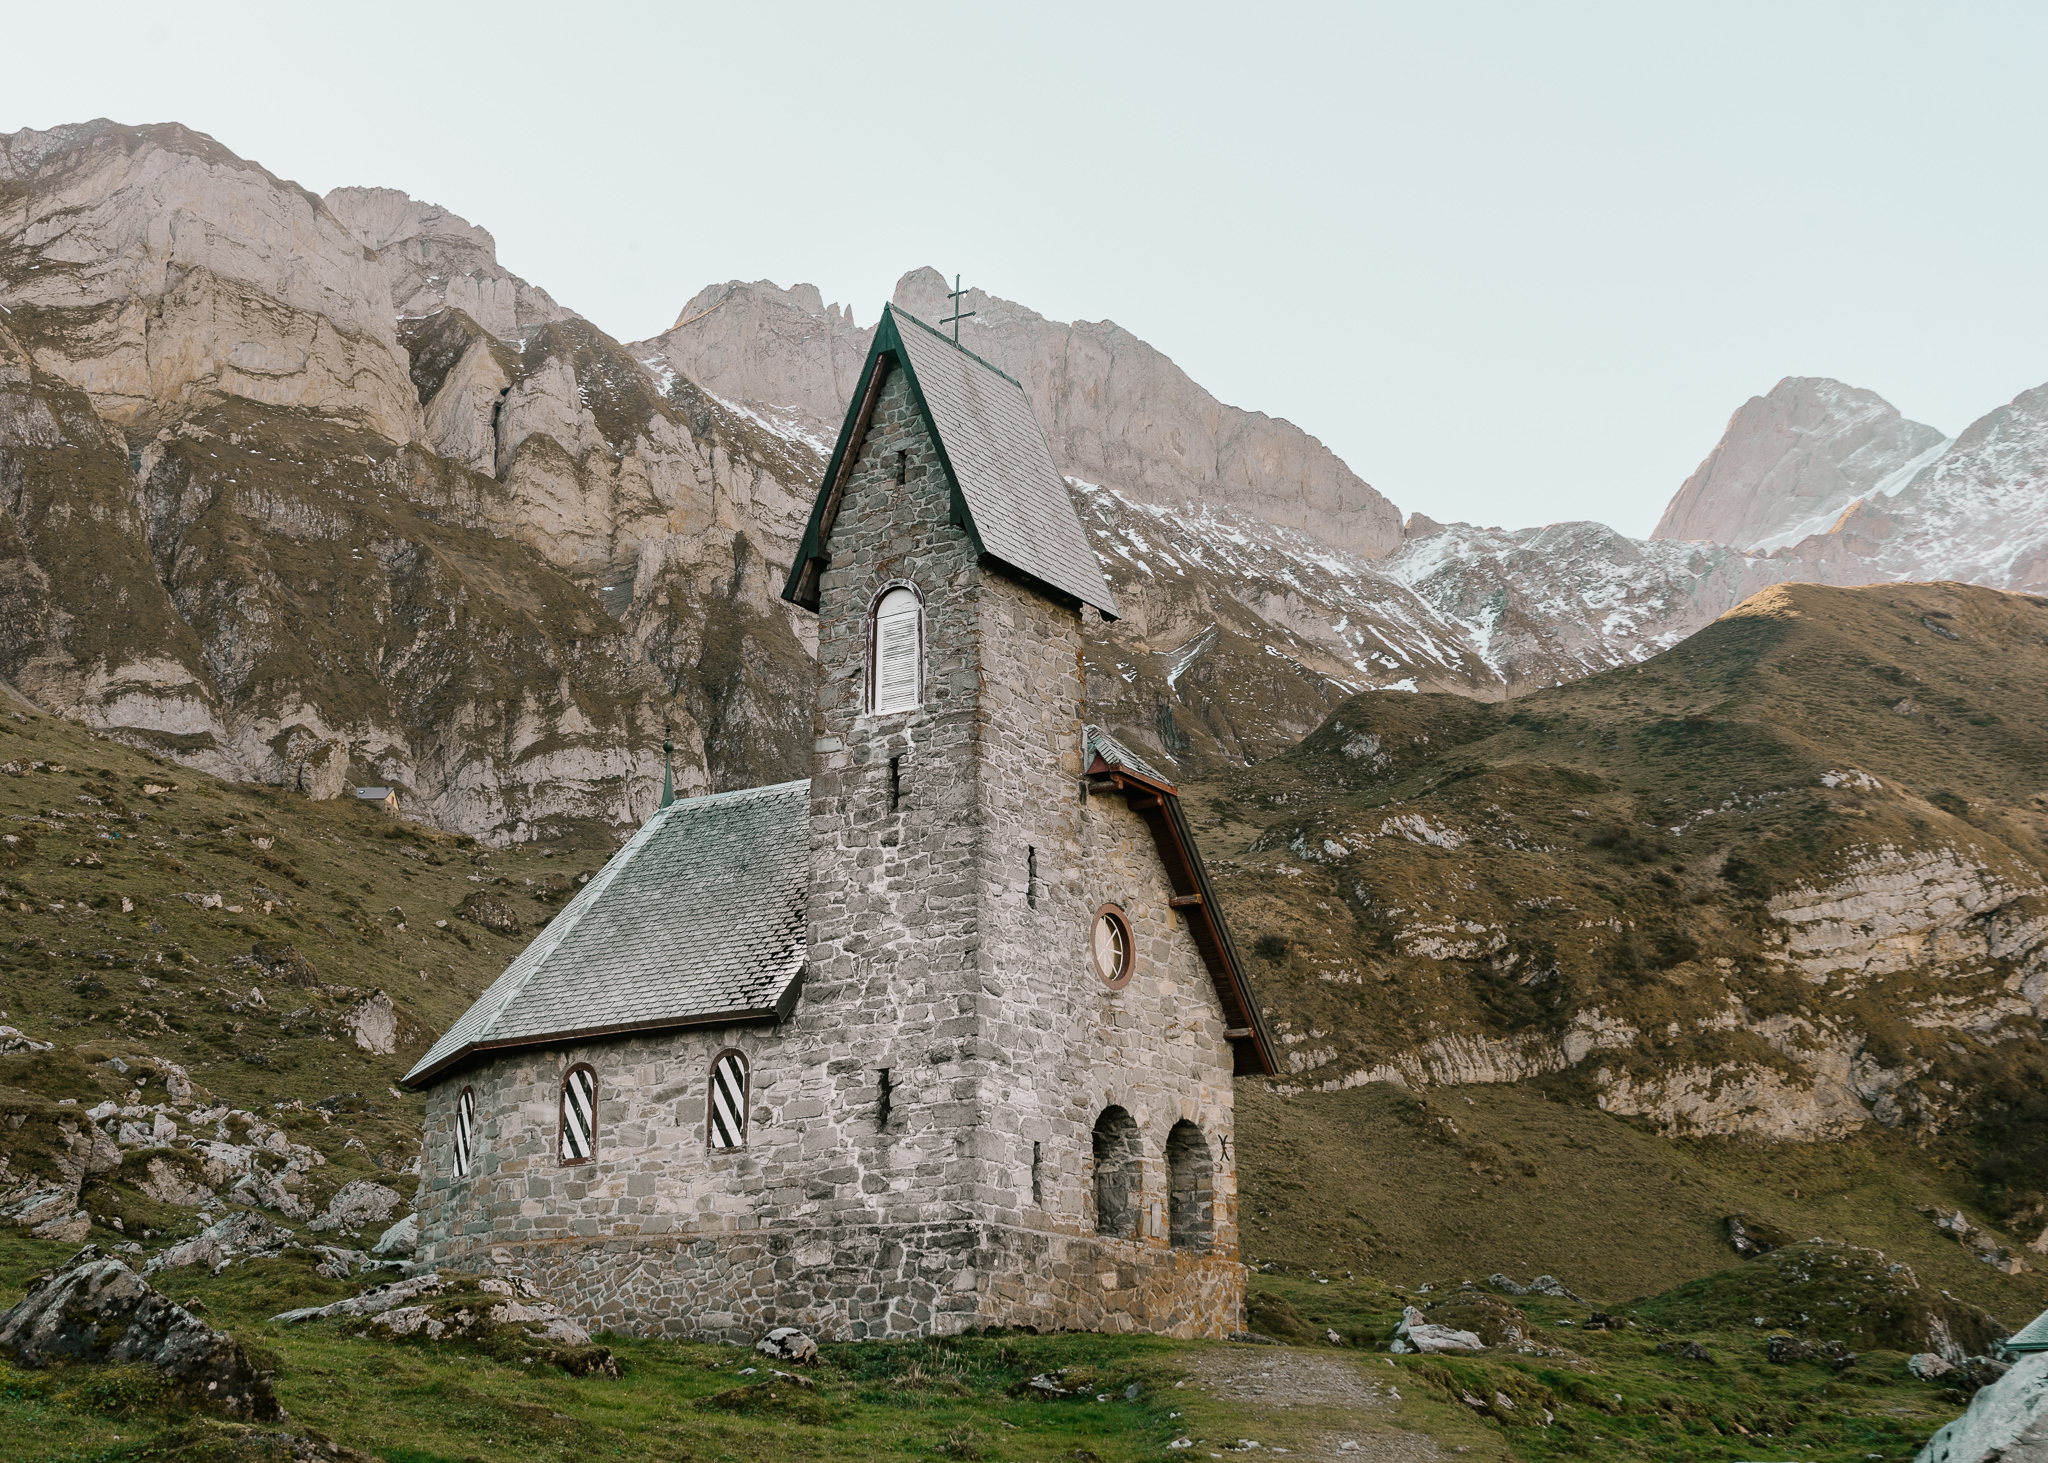 A stone church in Megaslip Hamlet in Alpstein